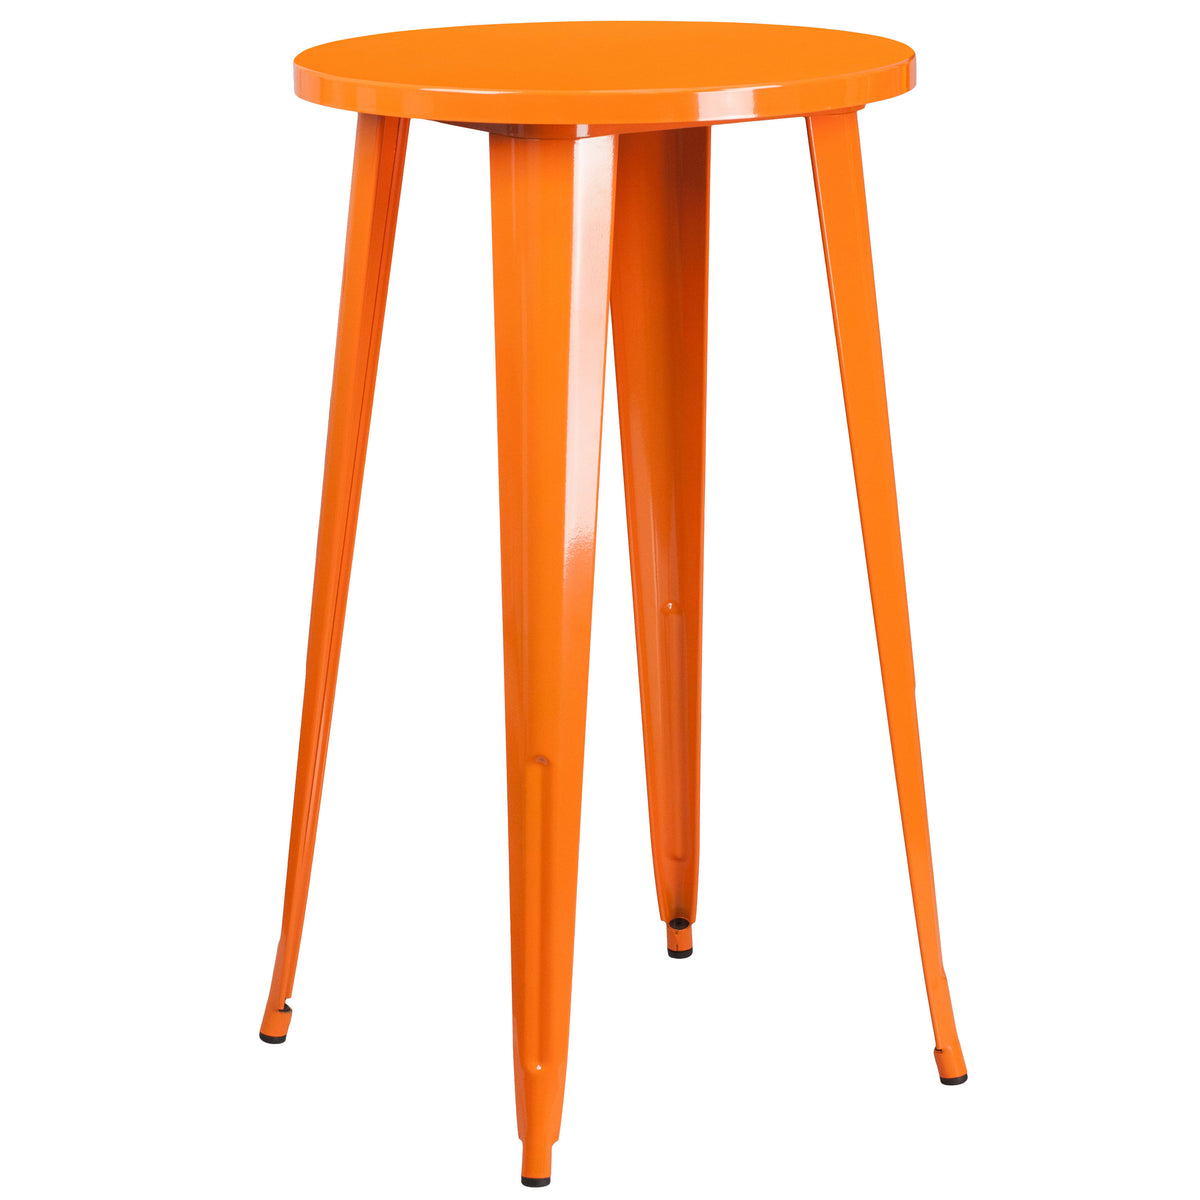 Orange |#| 24inch Round Orange Metal Indoor-Outdoor Bar Table Set with 4 Backless Stools